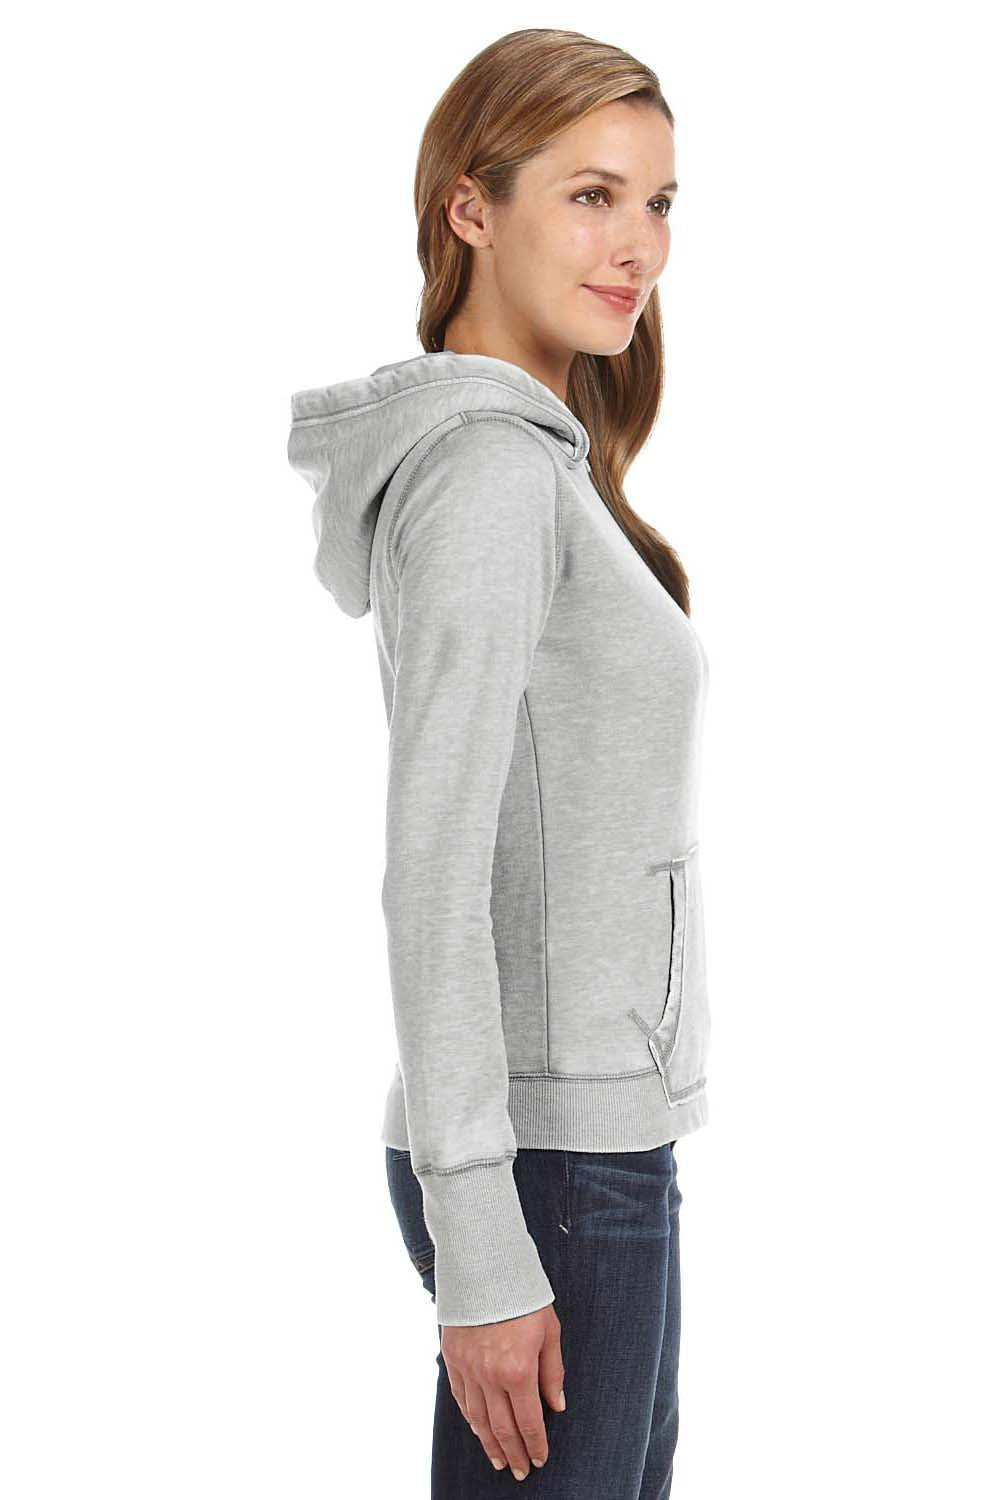 J America JA8912 Womens Zen Burnout Fleece Hooded Sweatshirt Hoodie Cement Grey Side